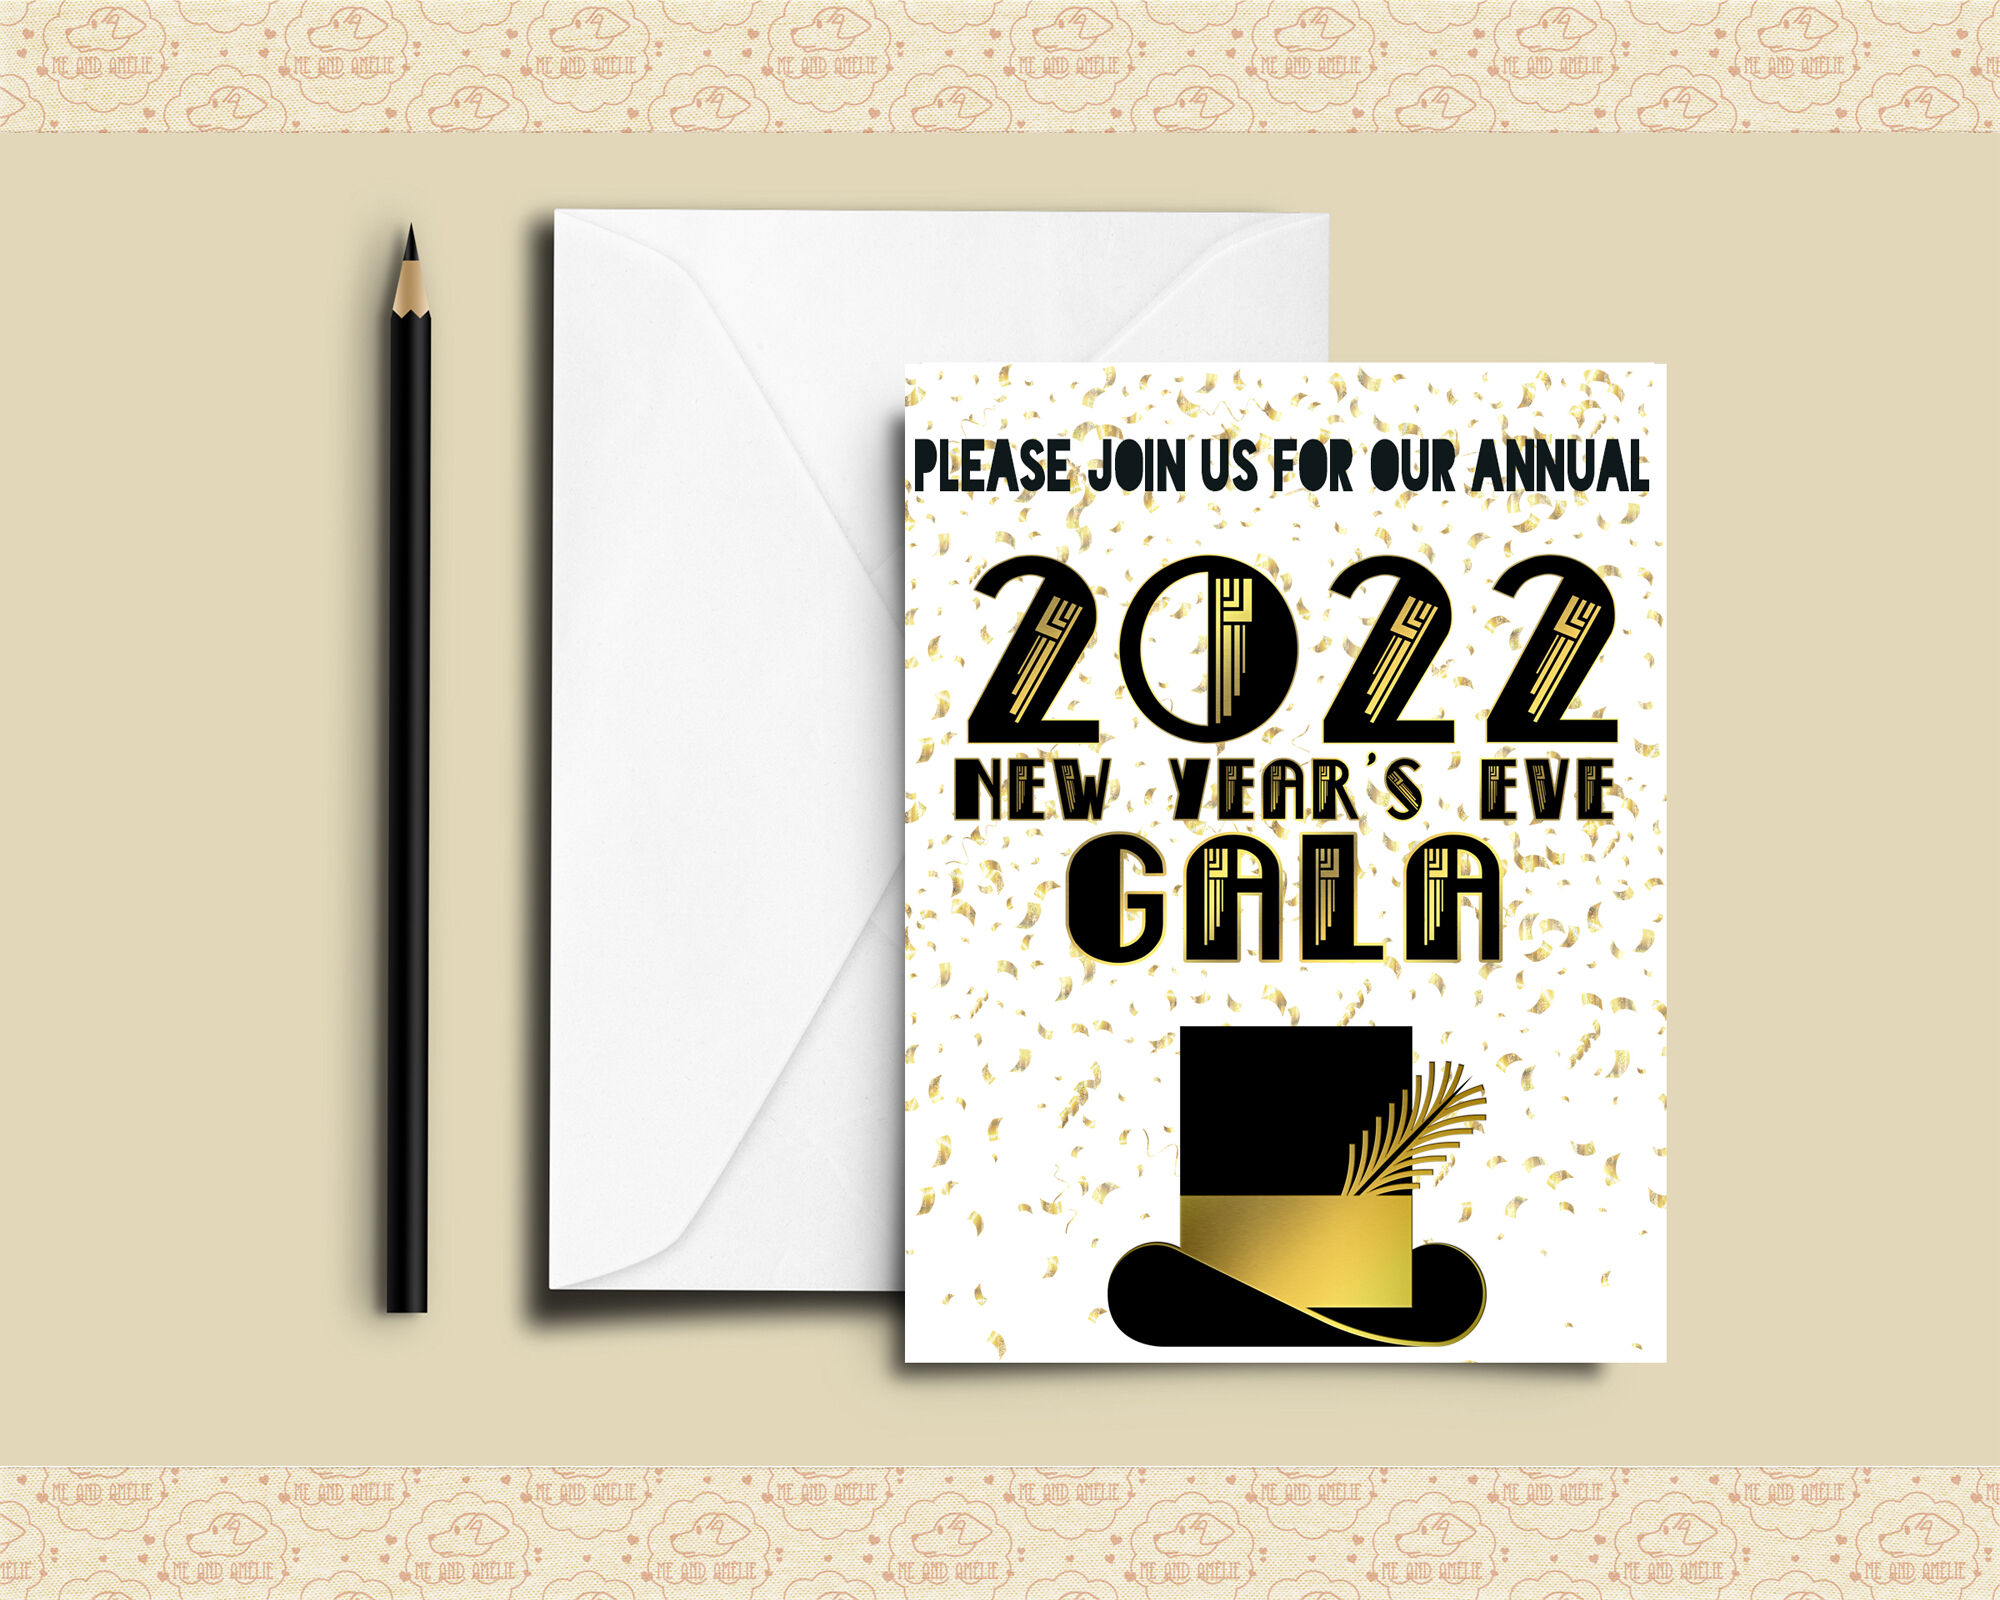 2022 new years clip art